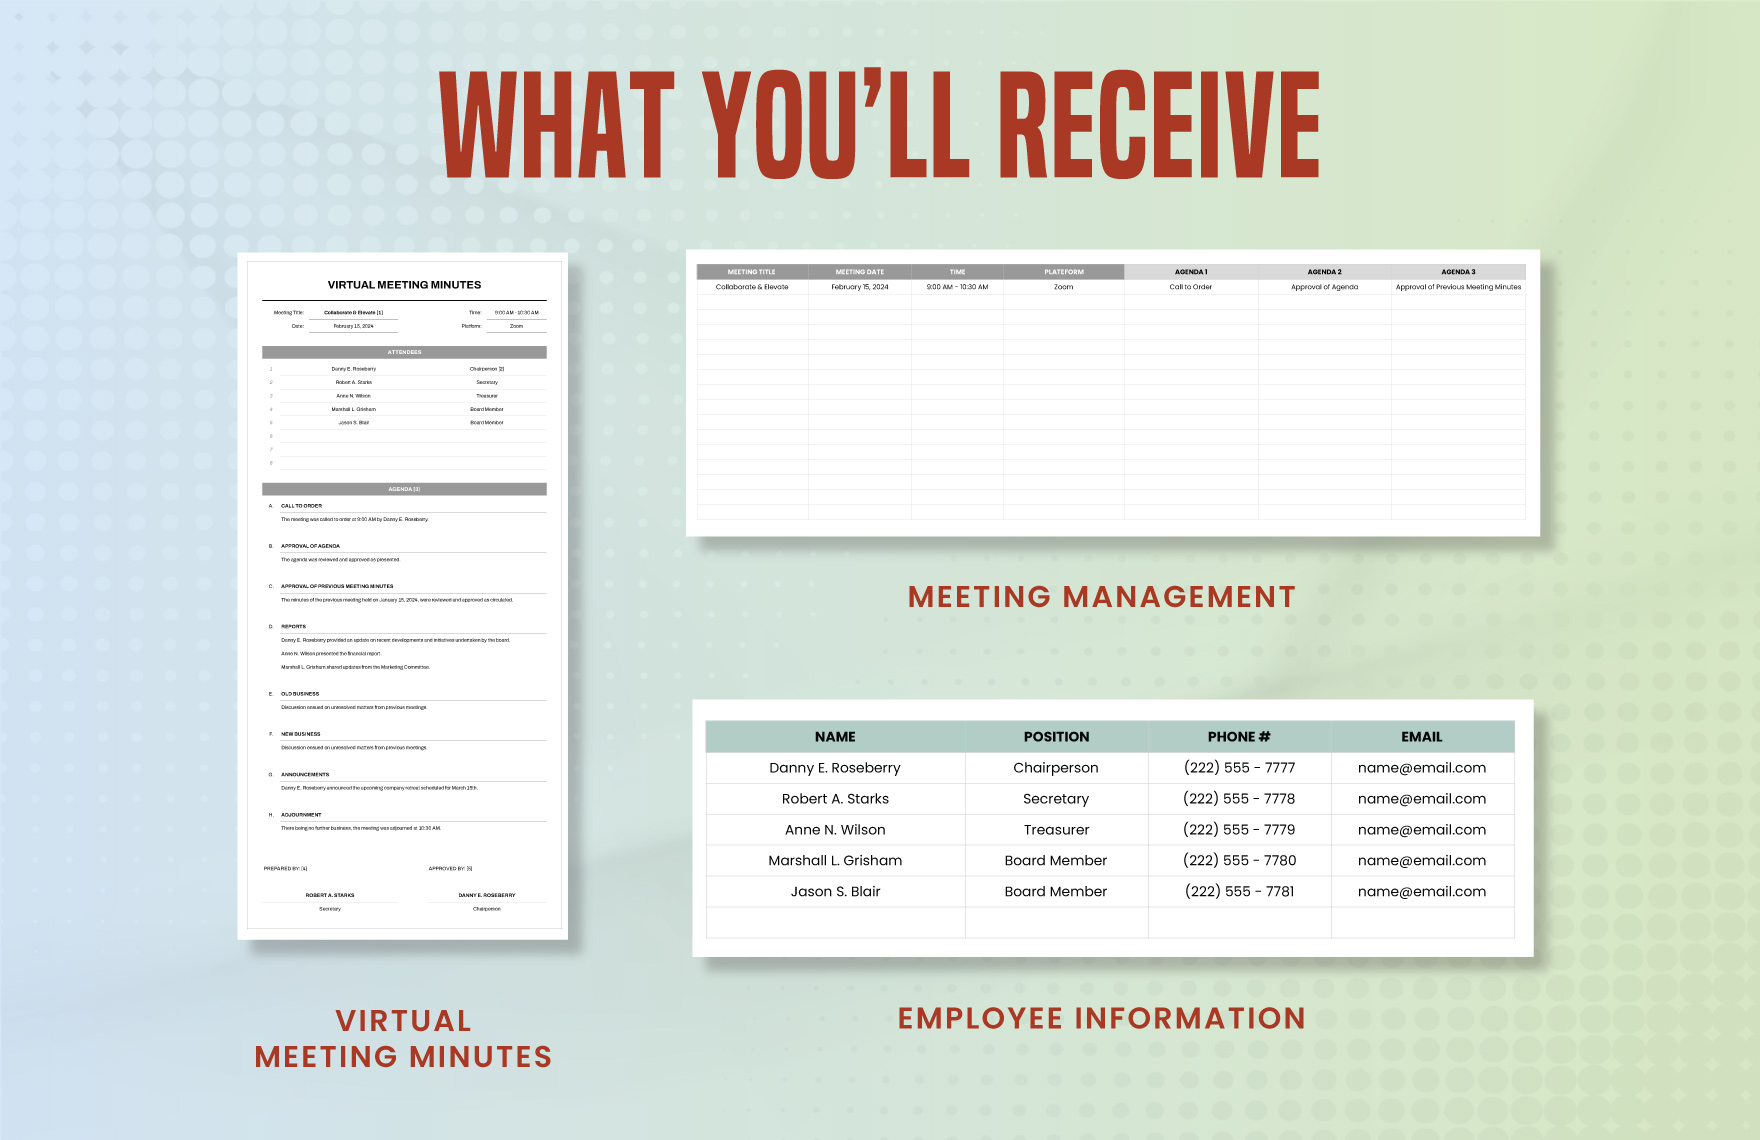 Virtual Meeting Minutes Template